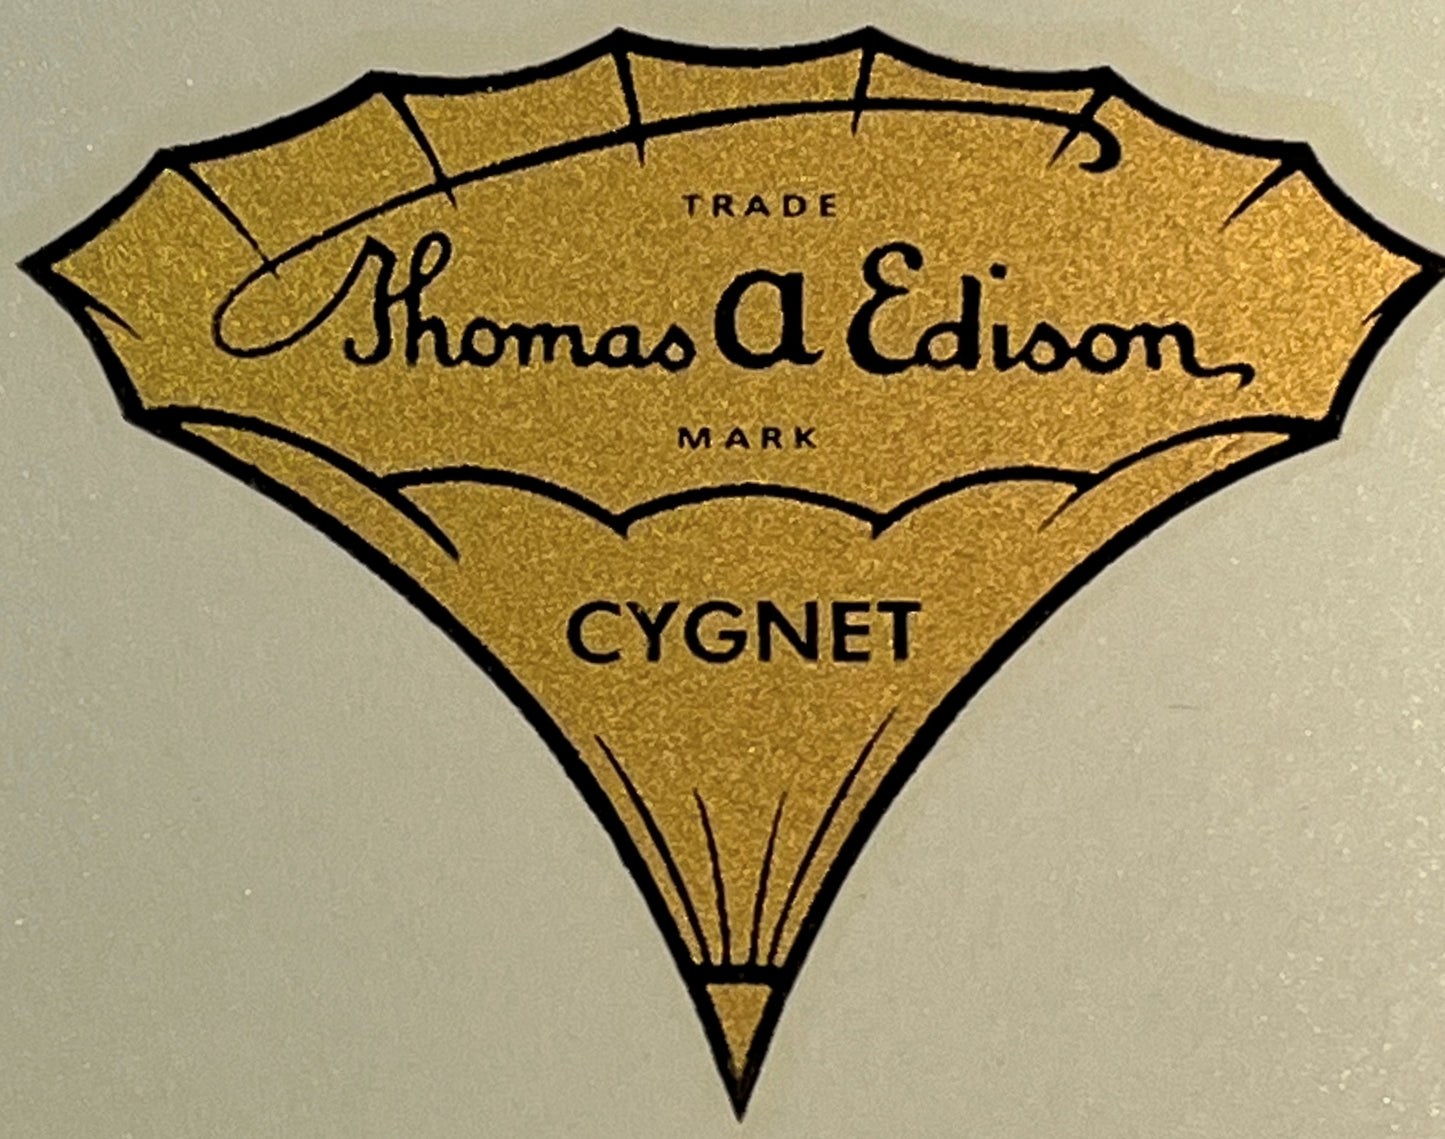 Edison Cygnet Trademark Decal 10006